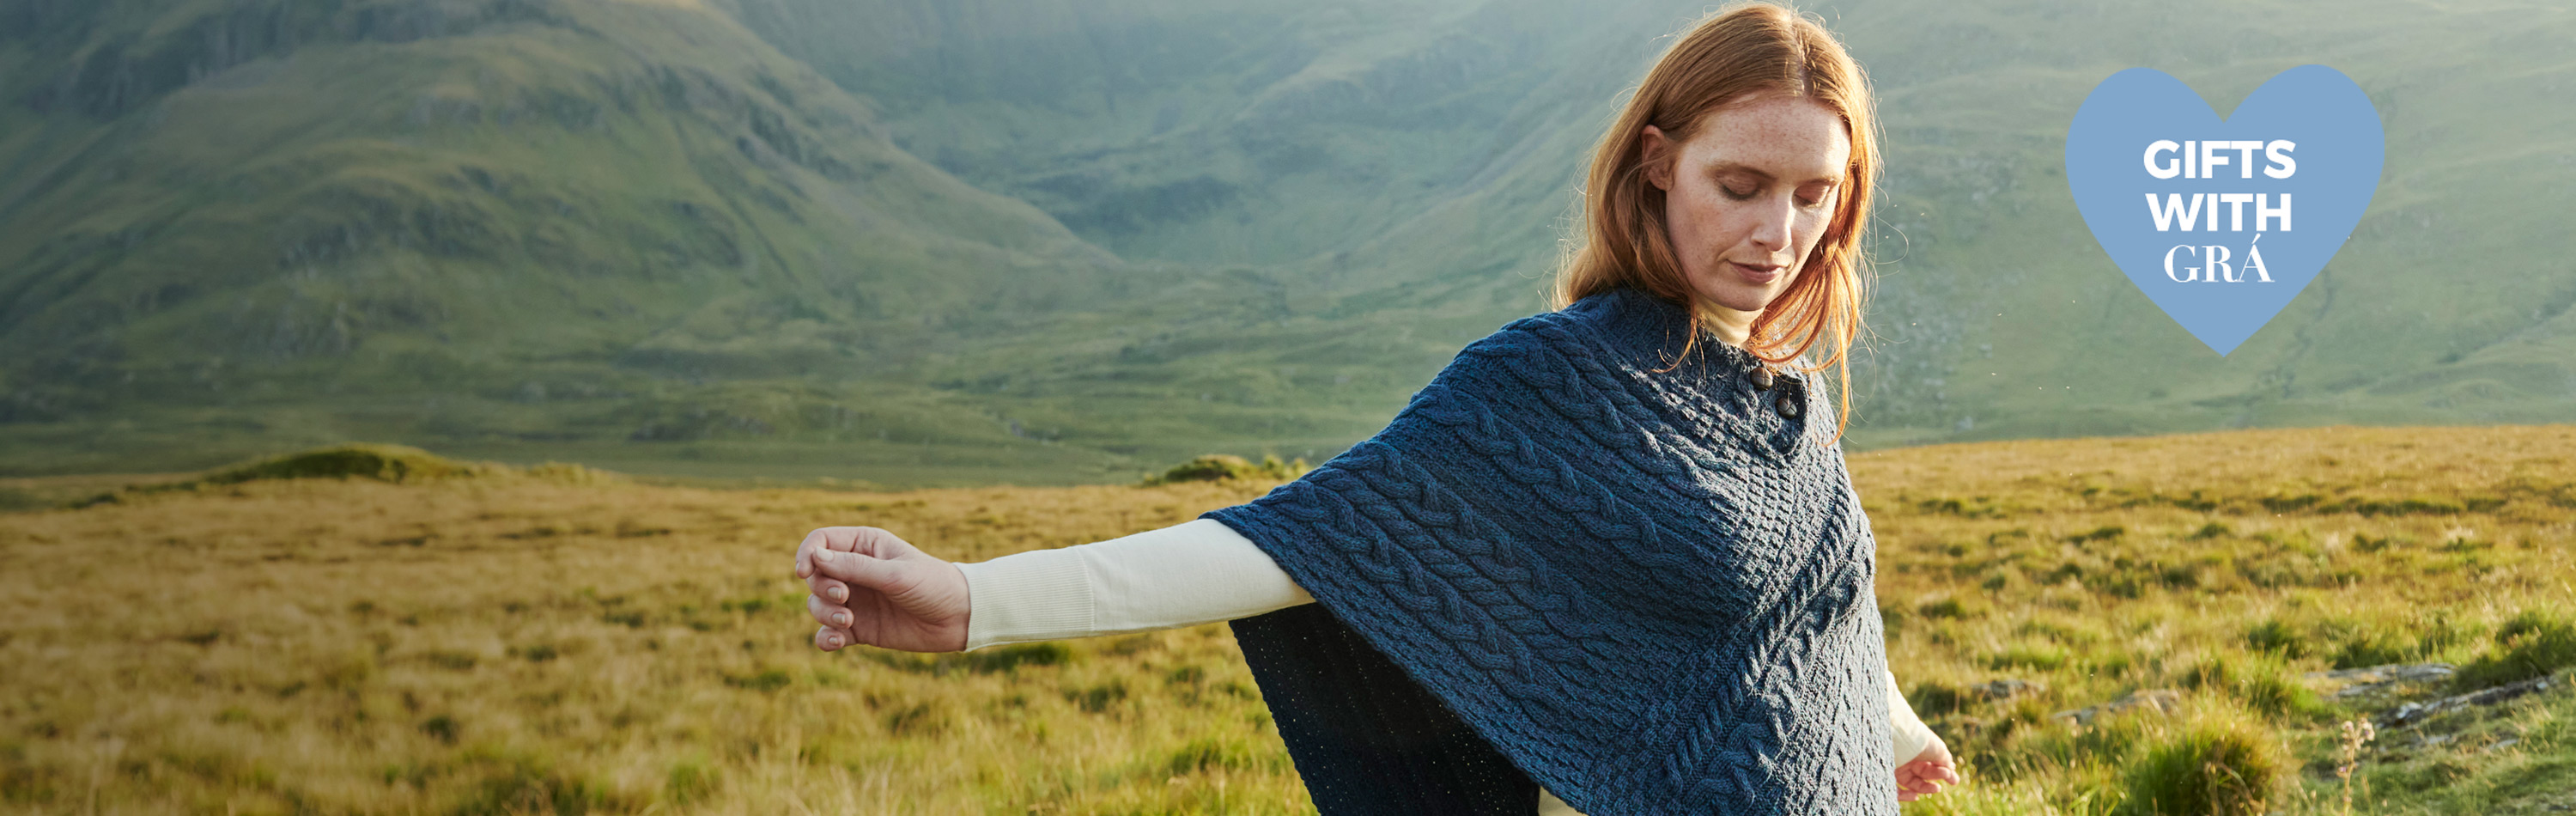 Red haired woman enjoying a rural irish setting wearing Aran knitwear